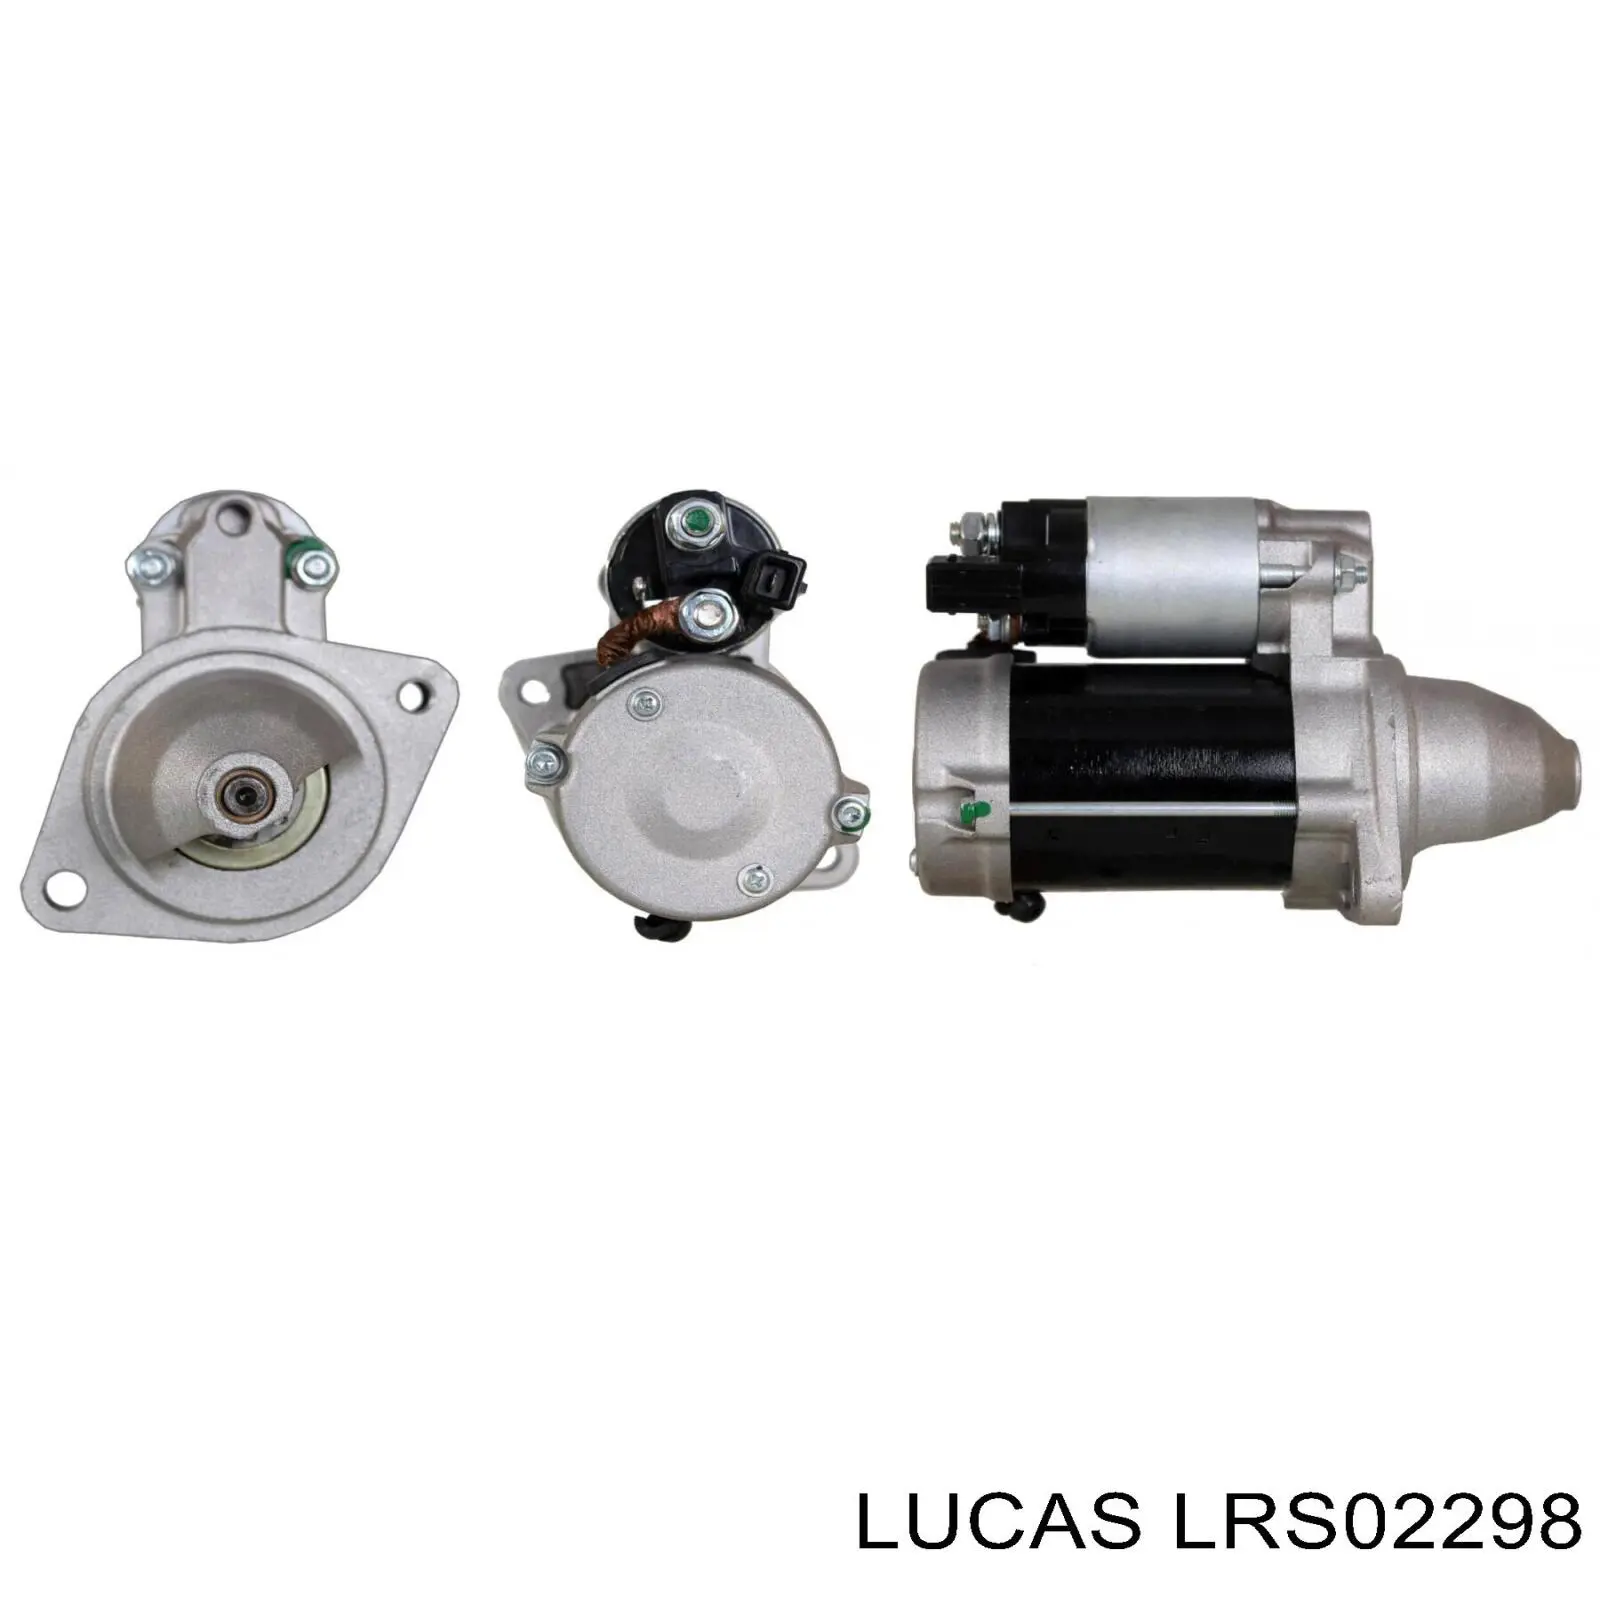 Motor de arranque LRS02298 Lucas